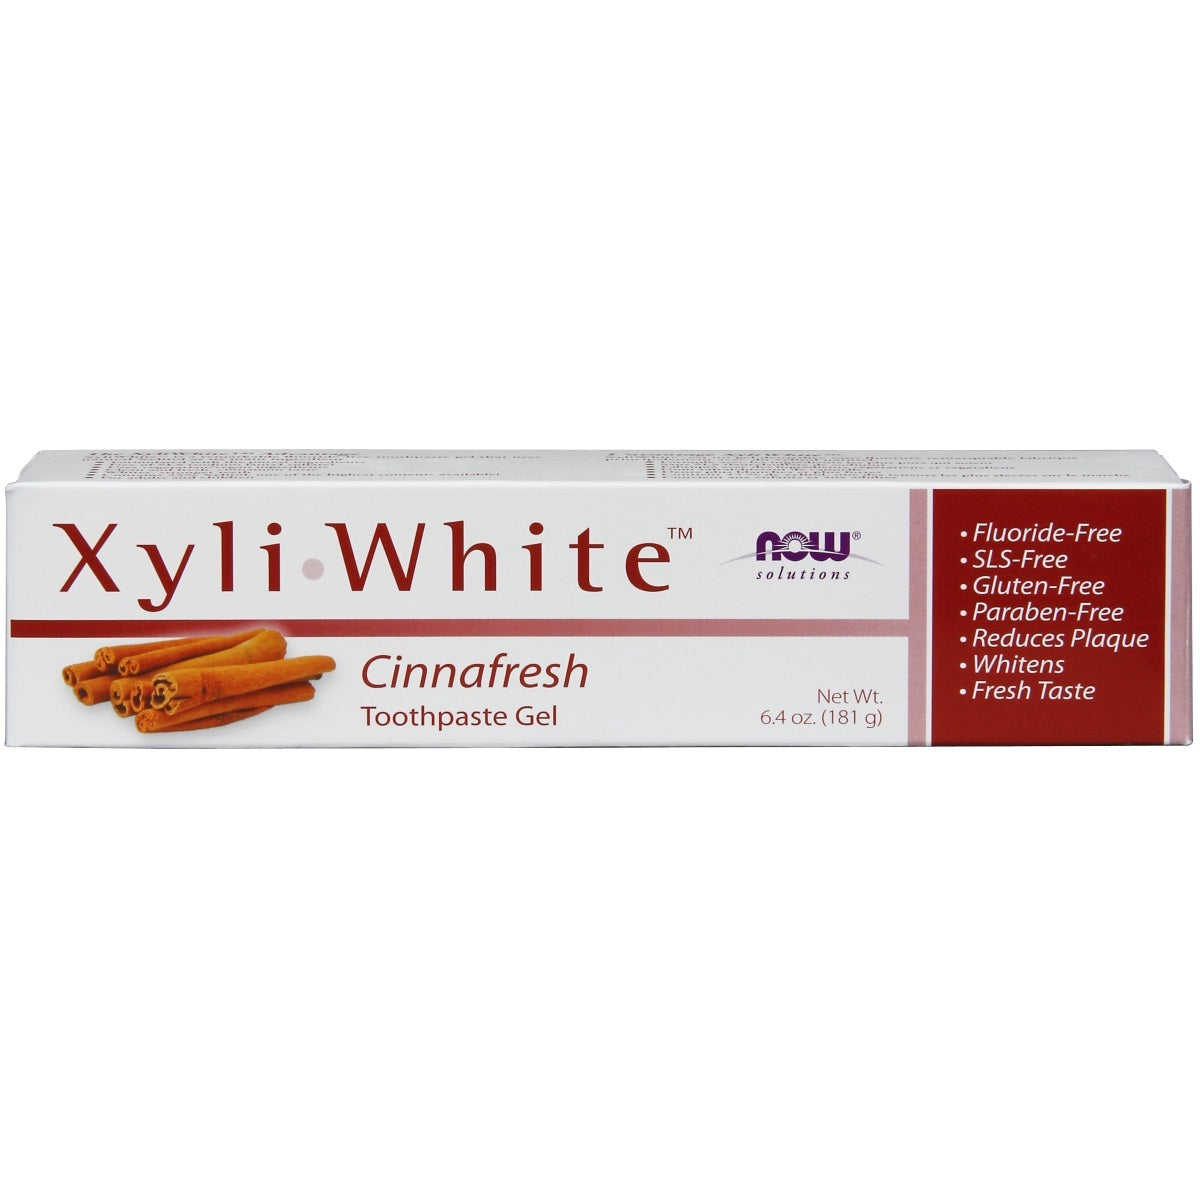 Primary image of XyliWhite Toothpaste - Cinnafresh